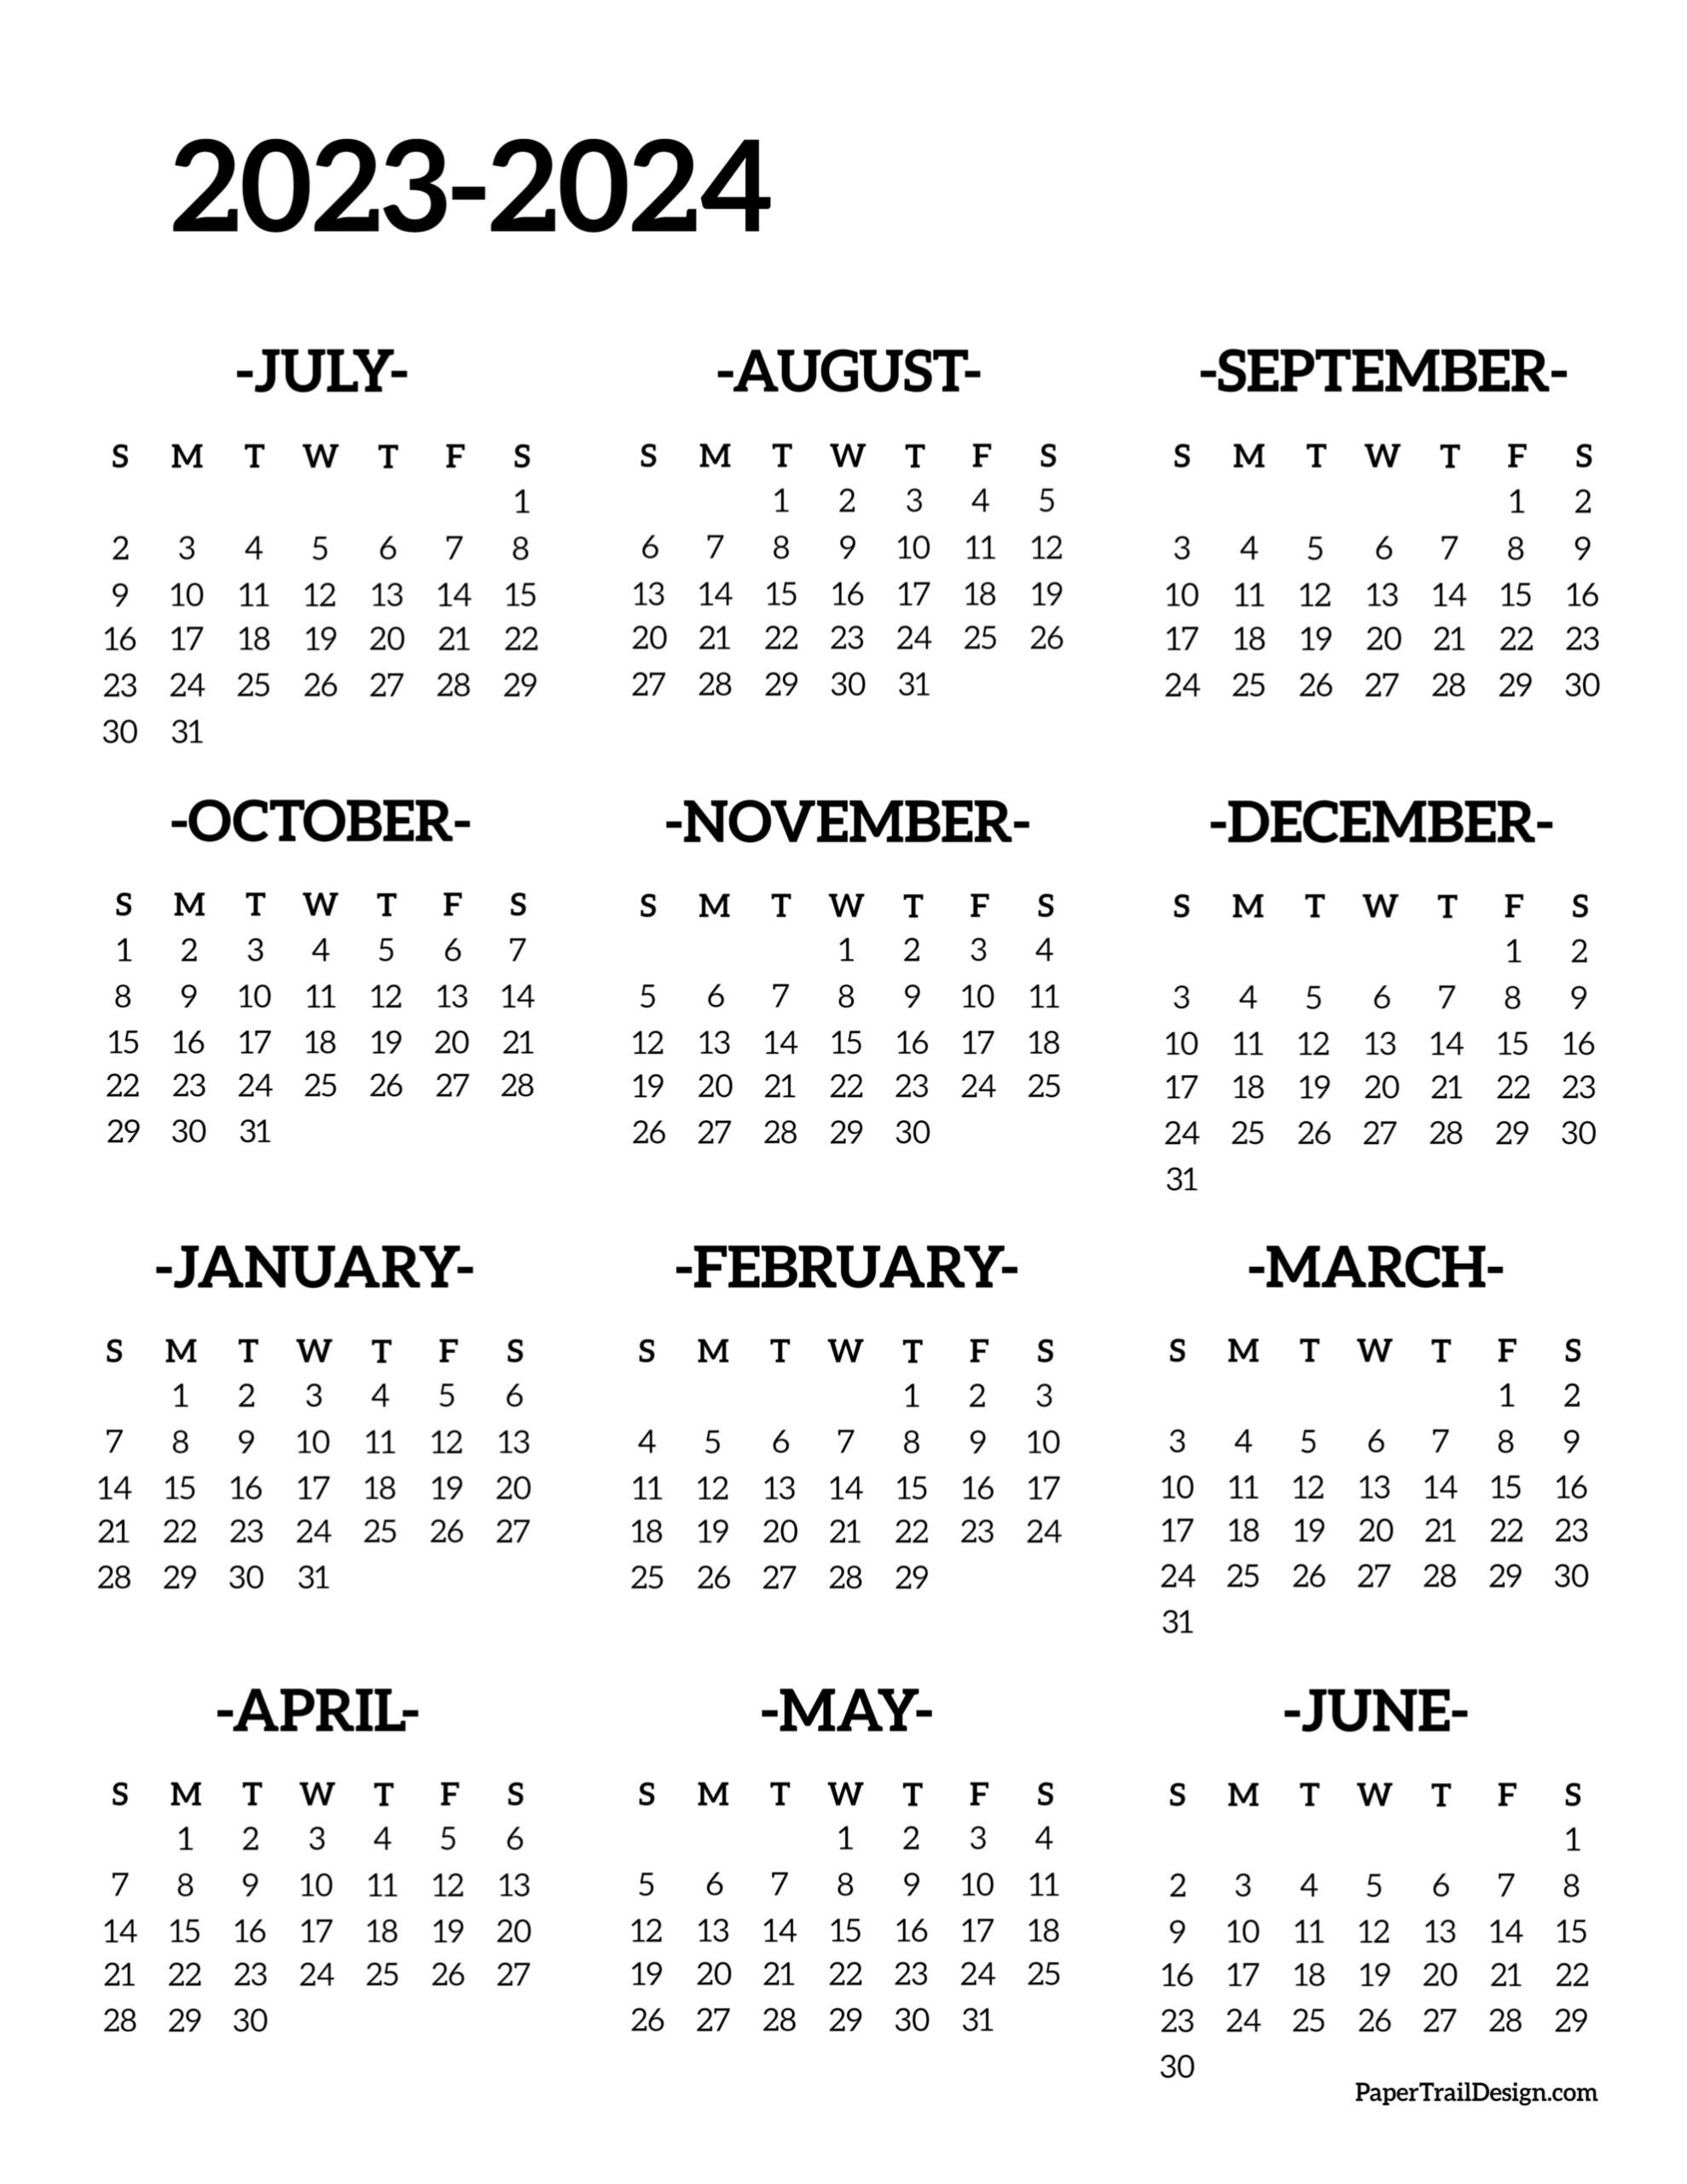 2023-2024 School Year Calendar Free Printable - Paper Trail Design for Free Printable Calendar 2023-2024